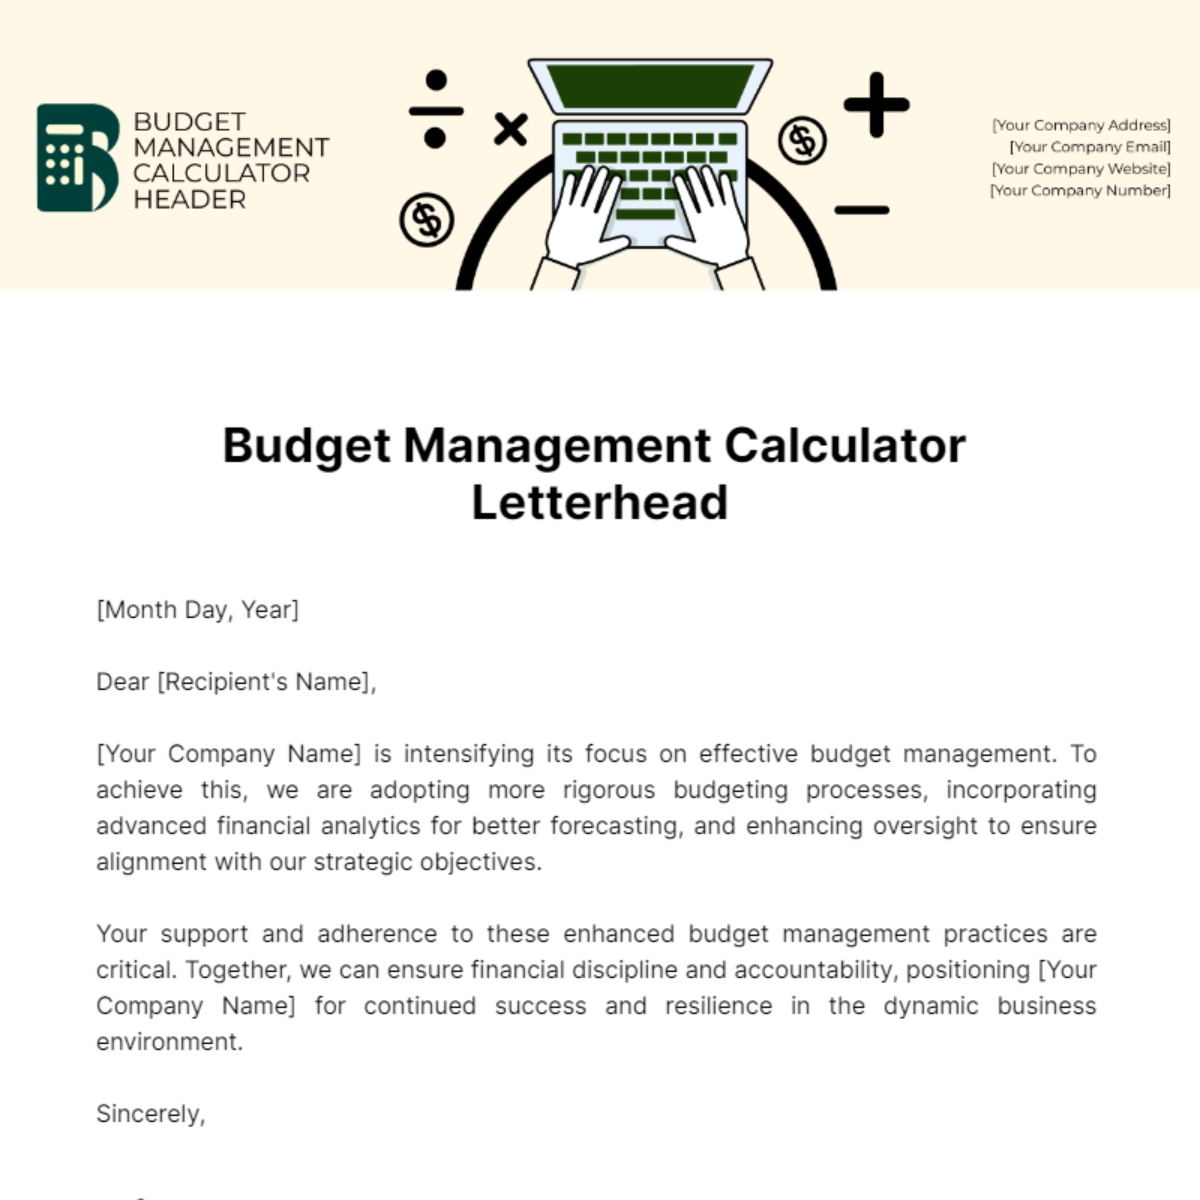 Free Budget Management Calculator Letterhead Template